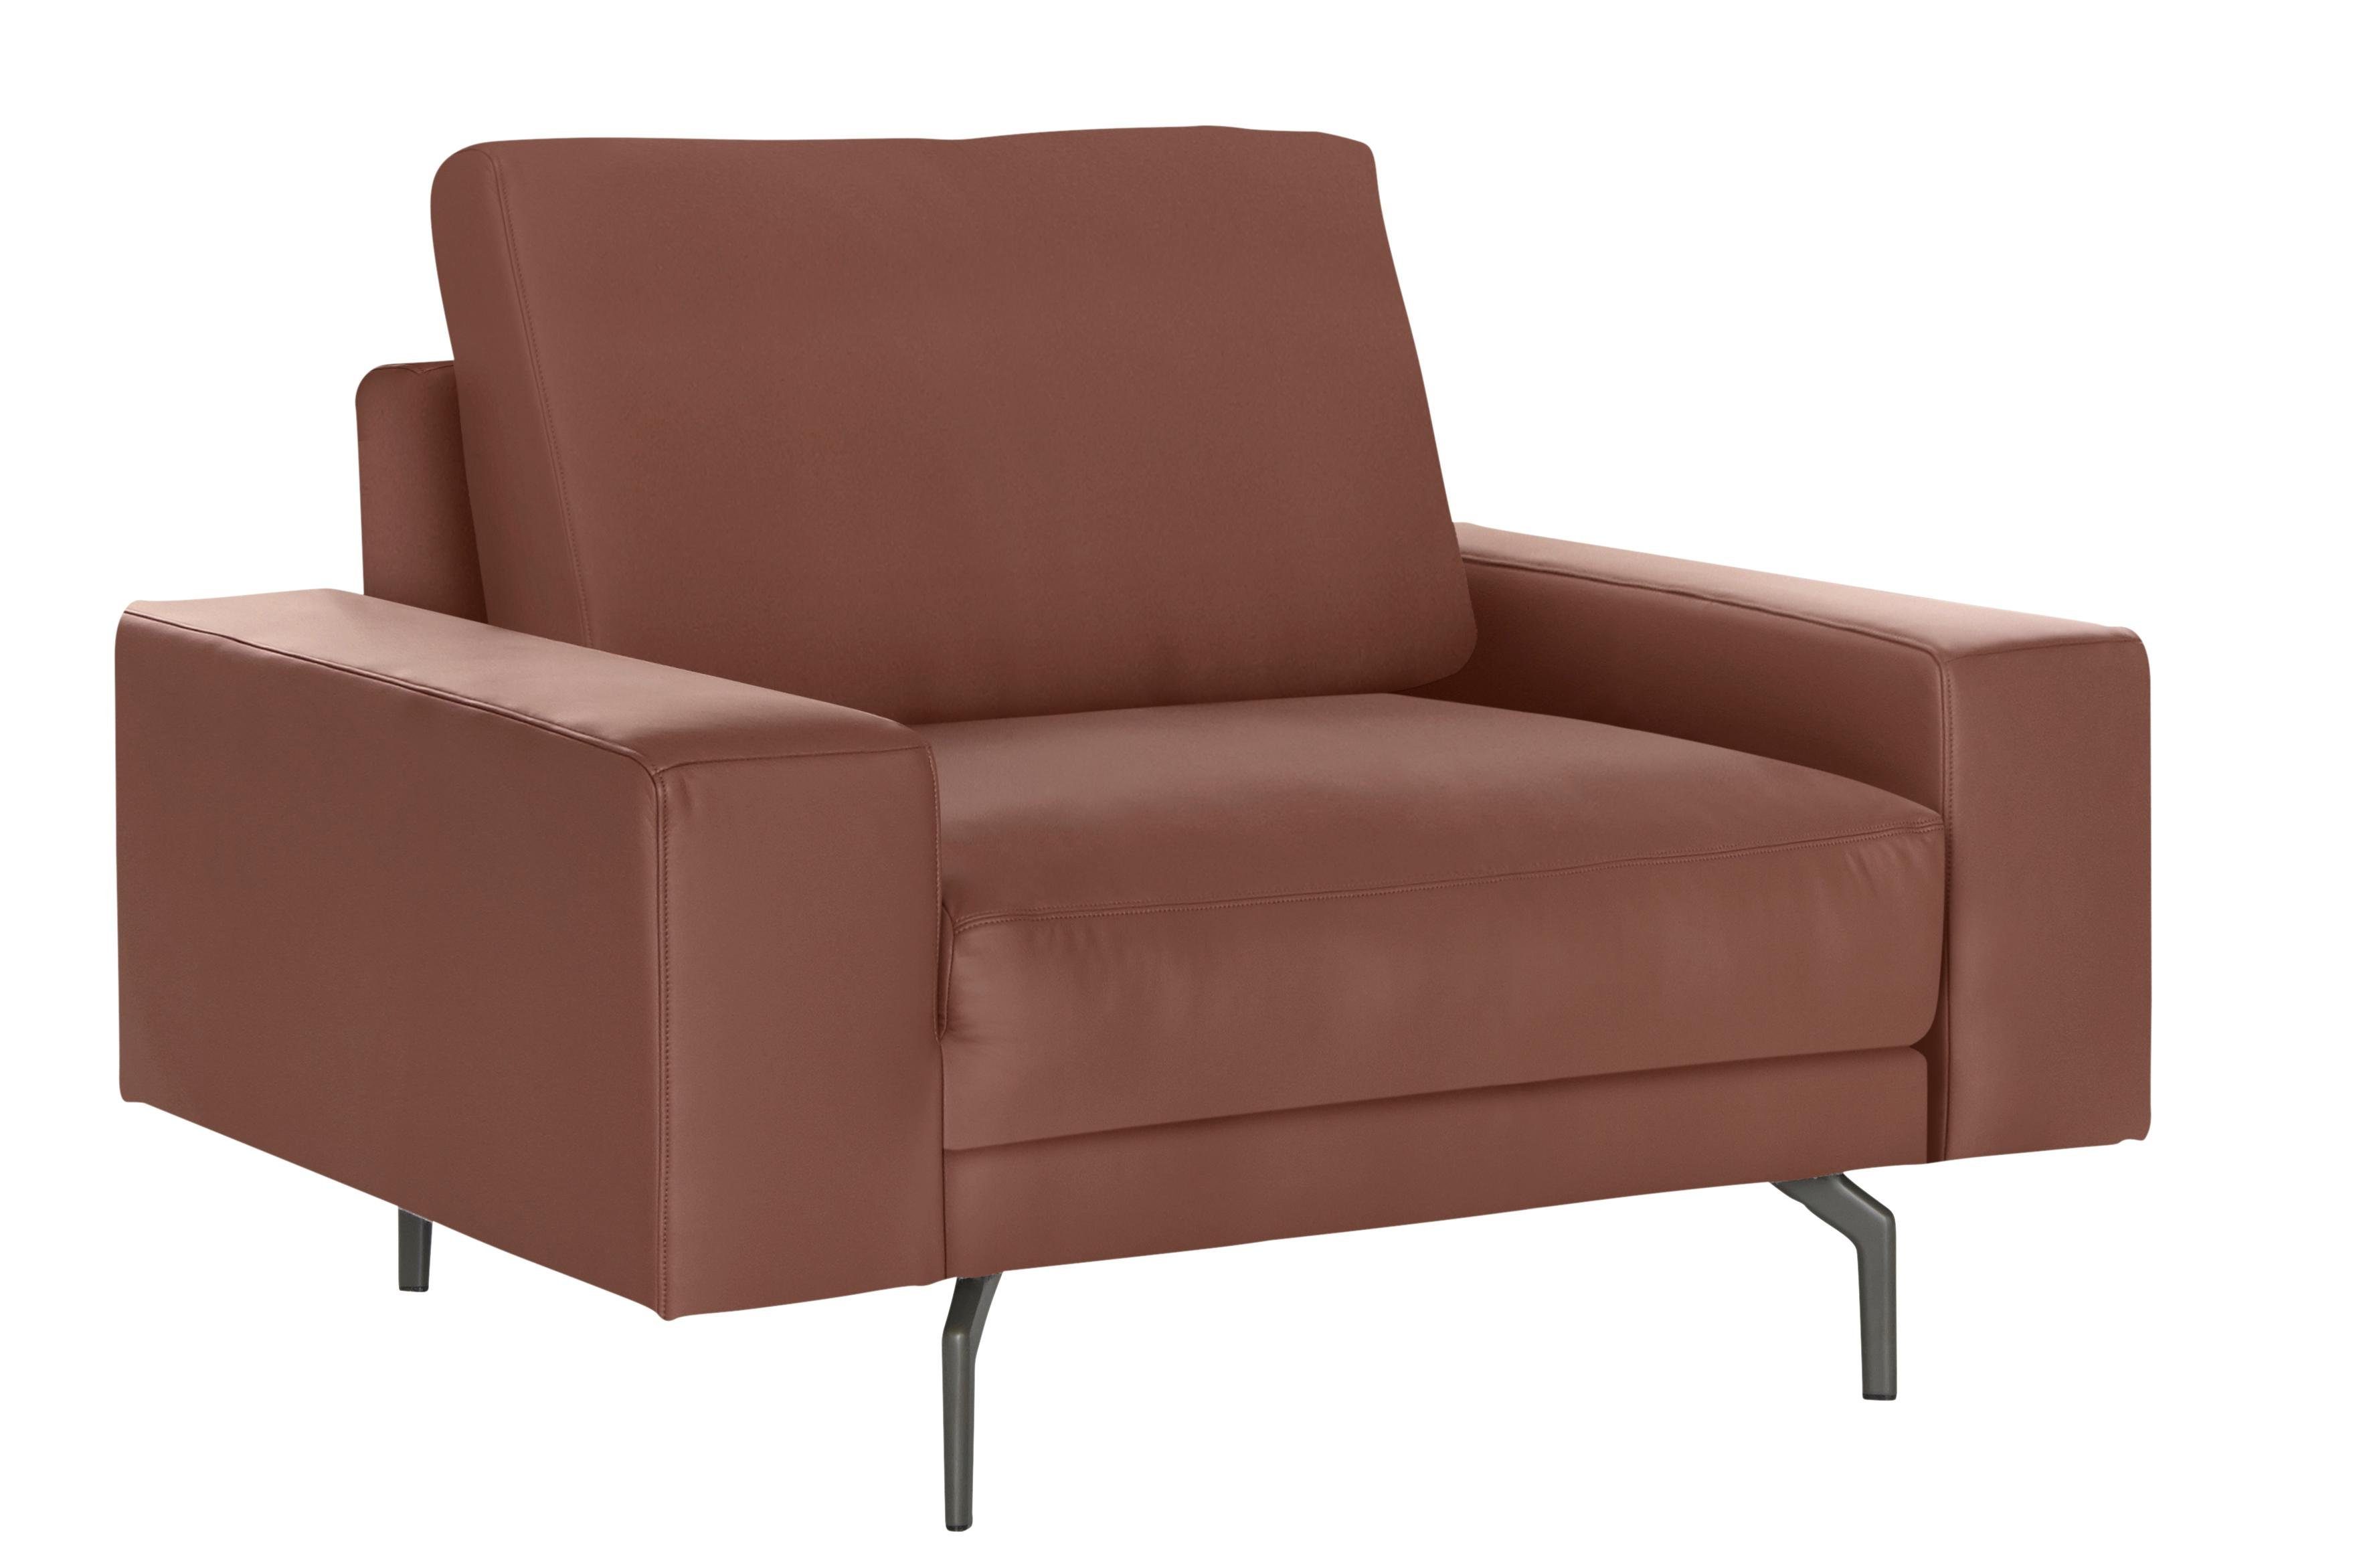 Neu eingeführt hülsta sofa Sessel hs.450, 120 breit Breite Armlehne cm Alugussfüße in umbragrau, niedrig